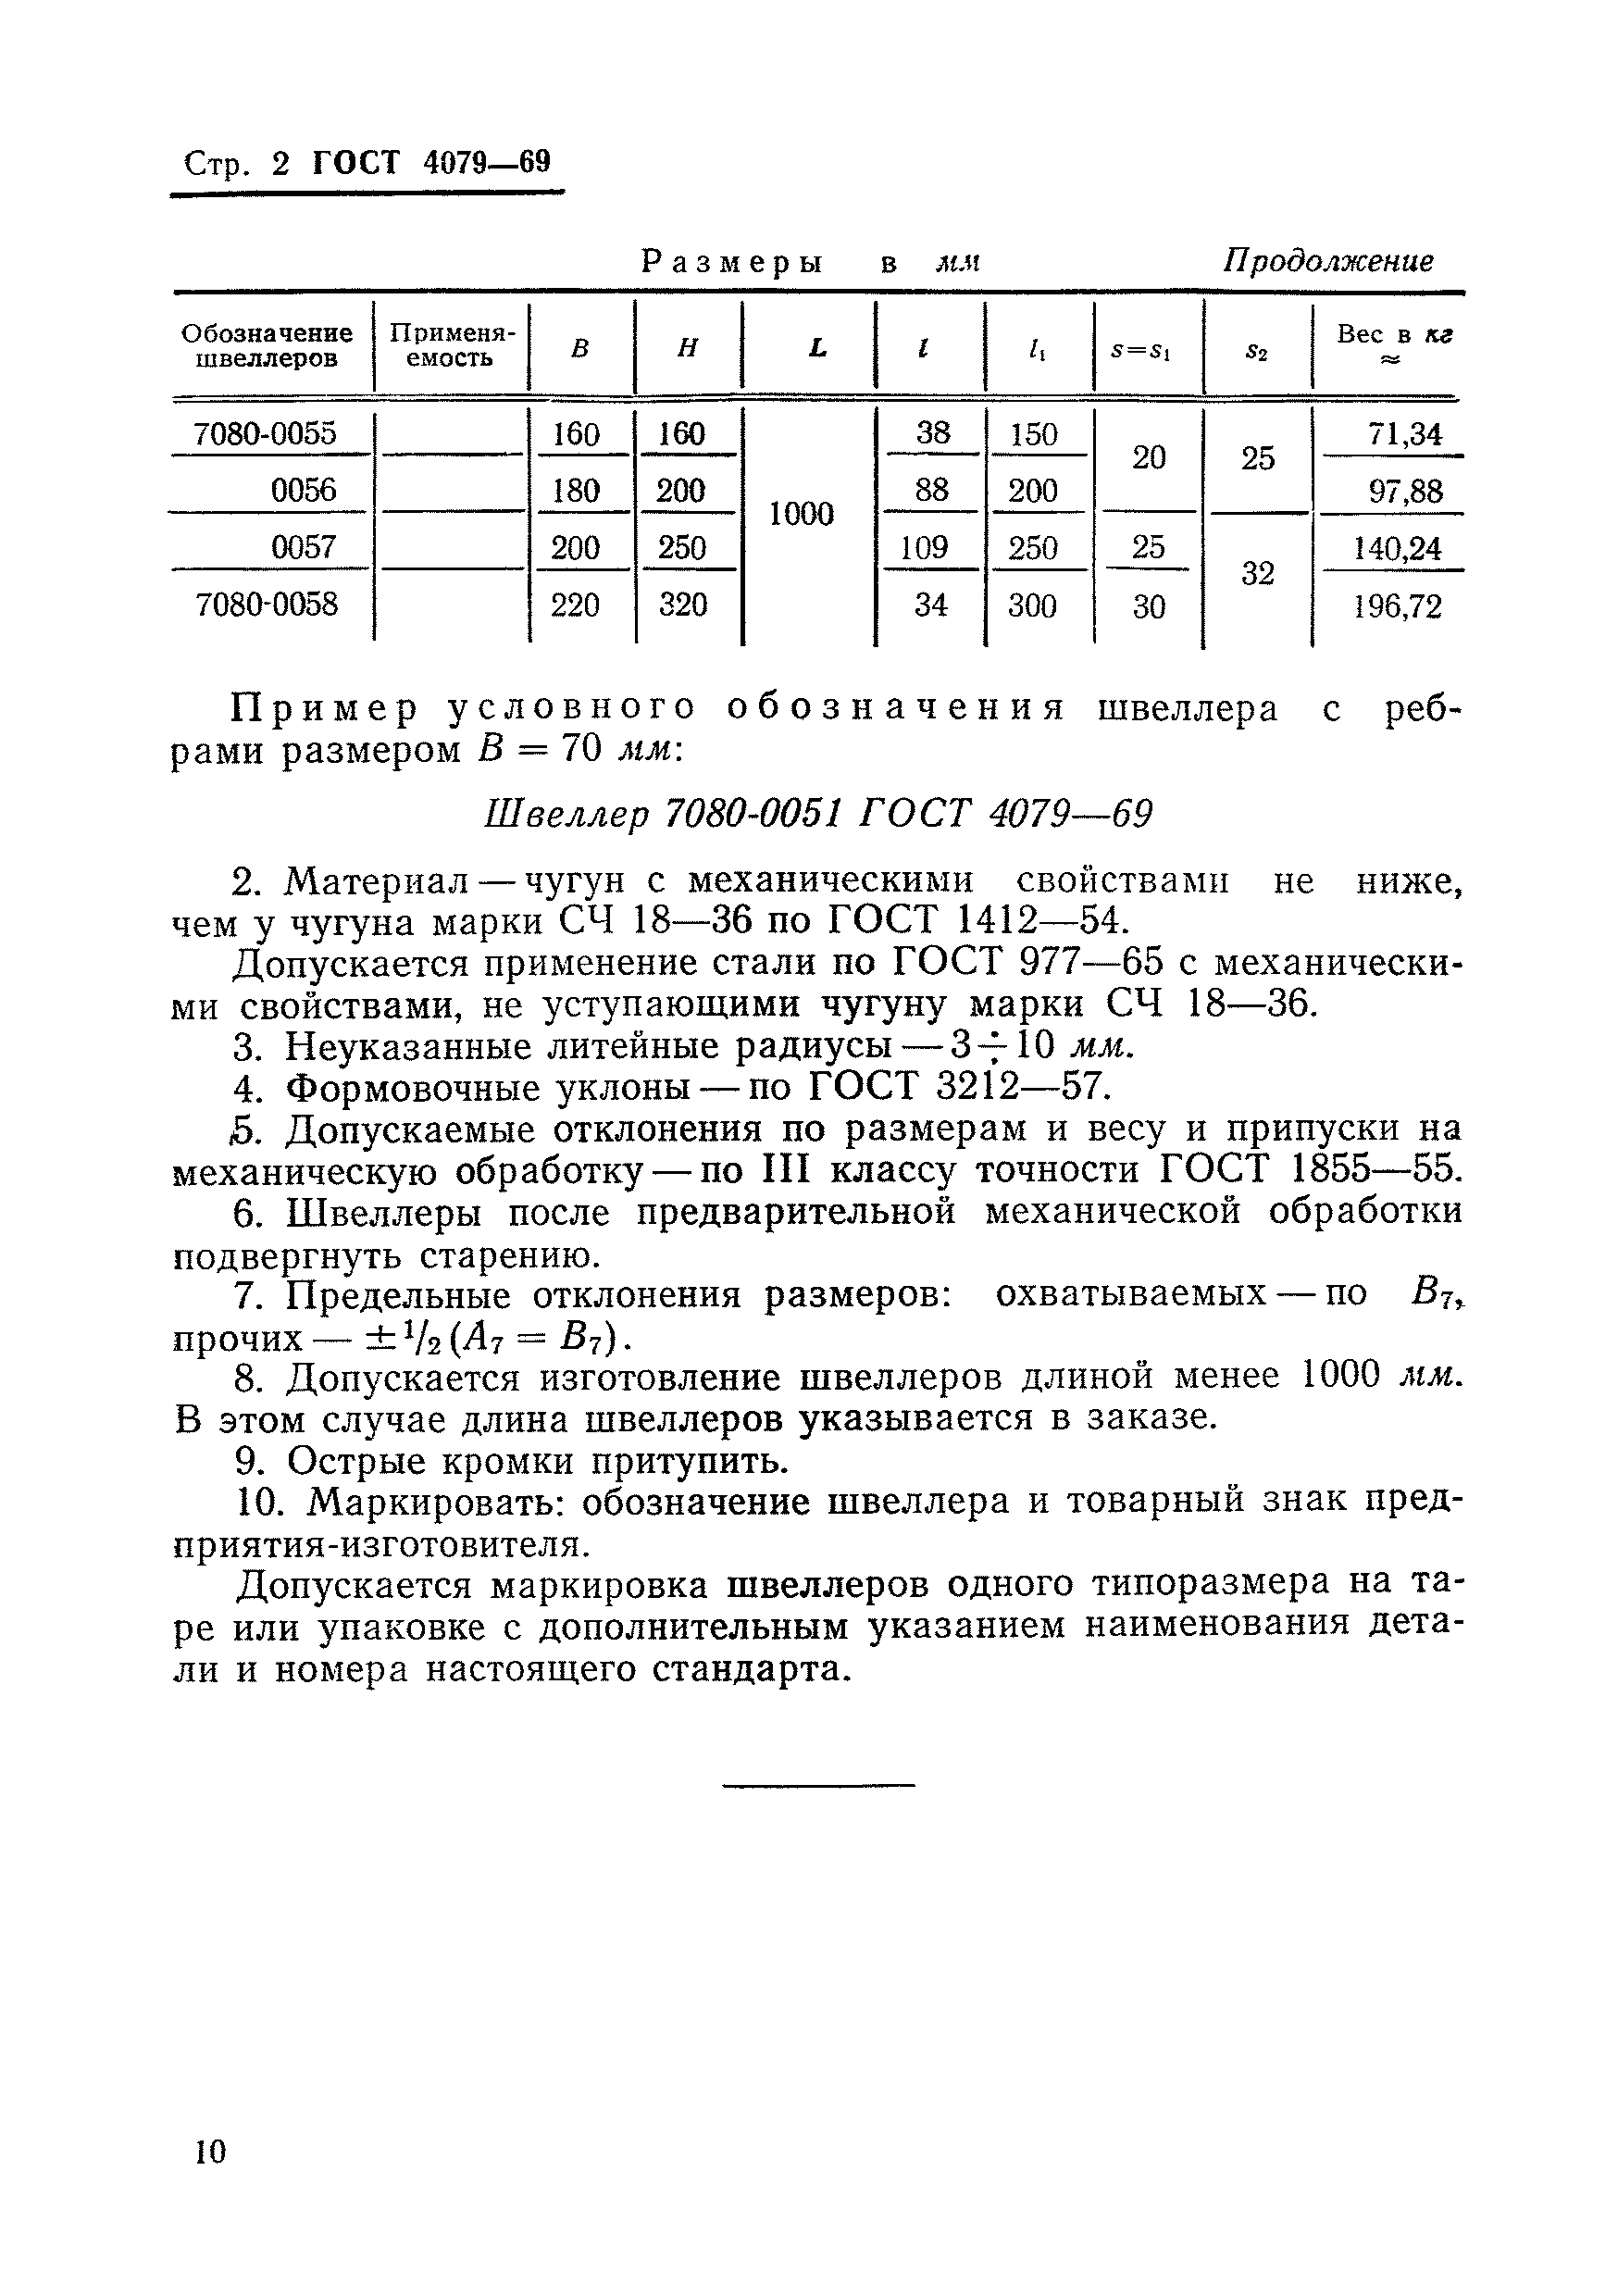 ГОСТ 4079-69